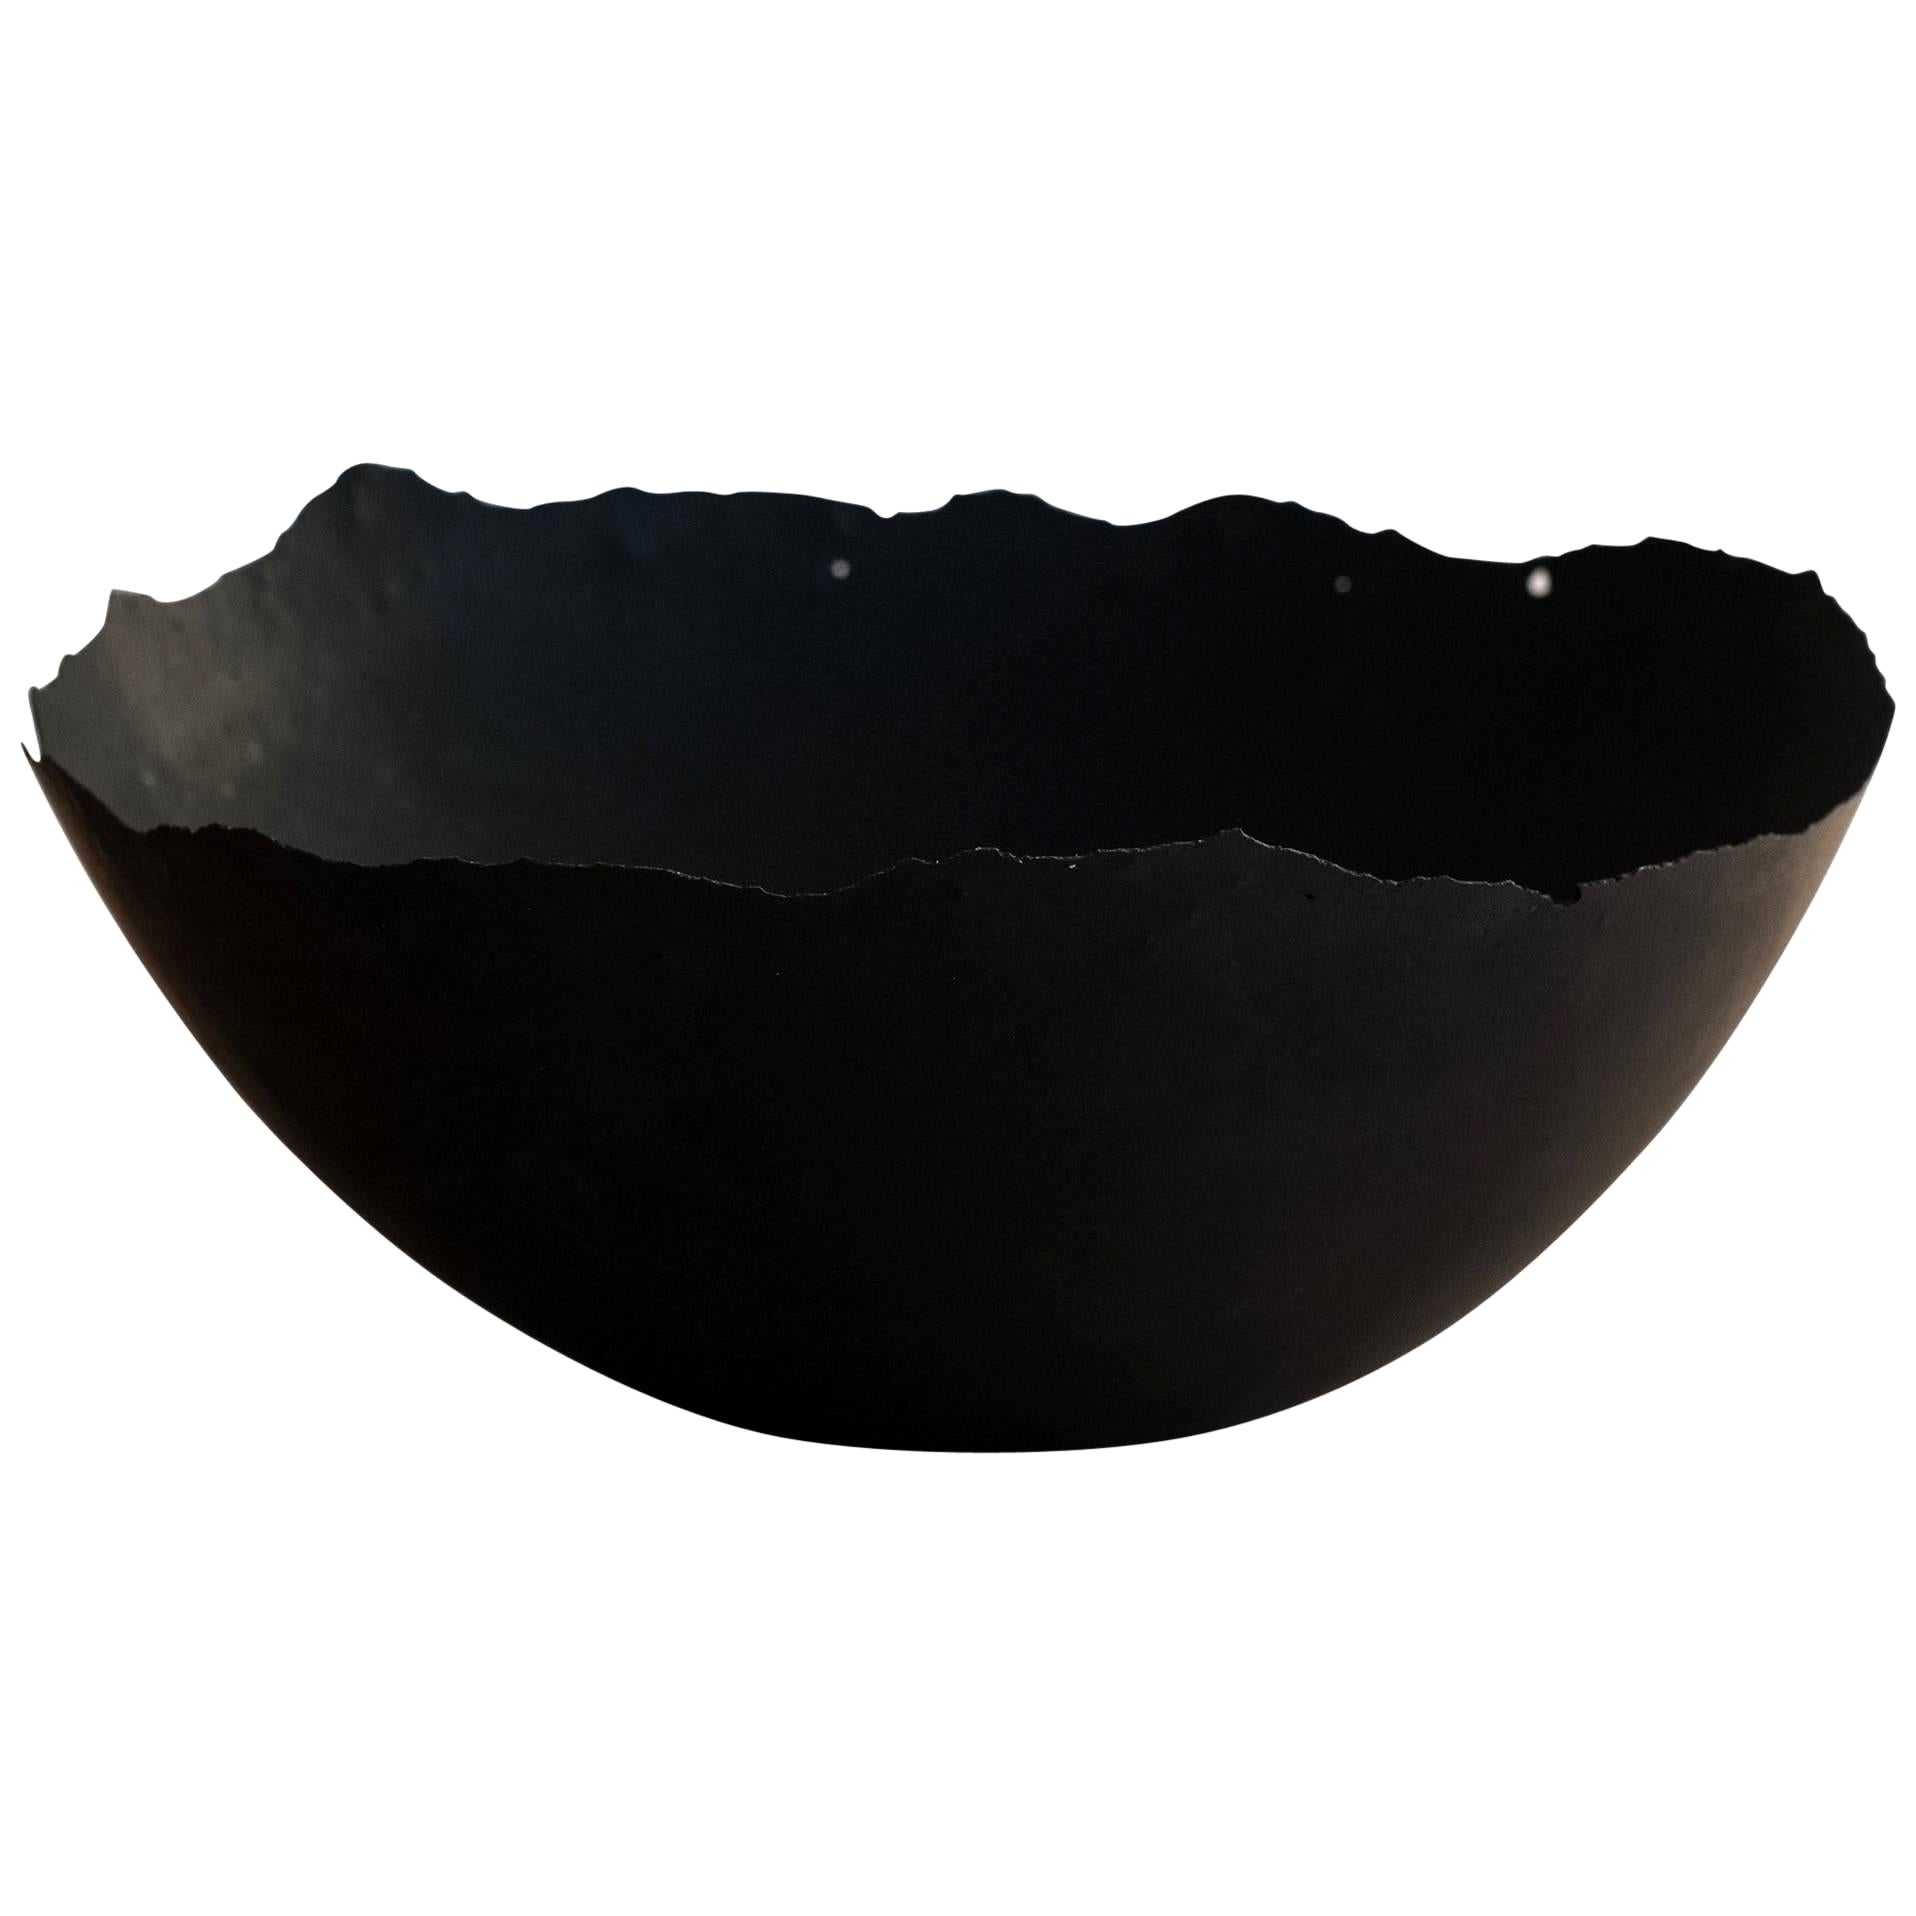 Handmade Cast Concrete Bowl in Black by Umé Studio